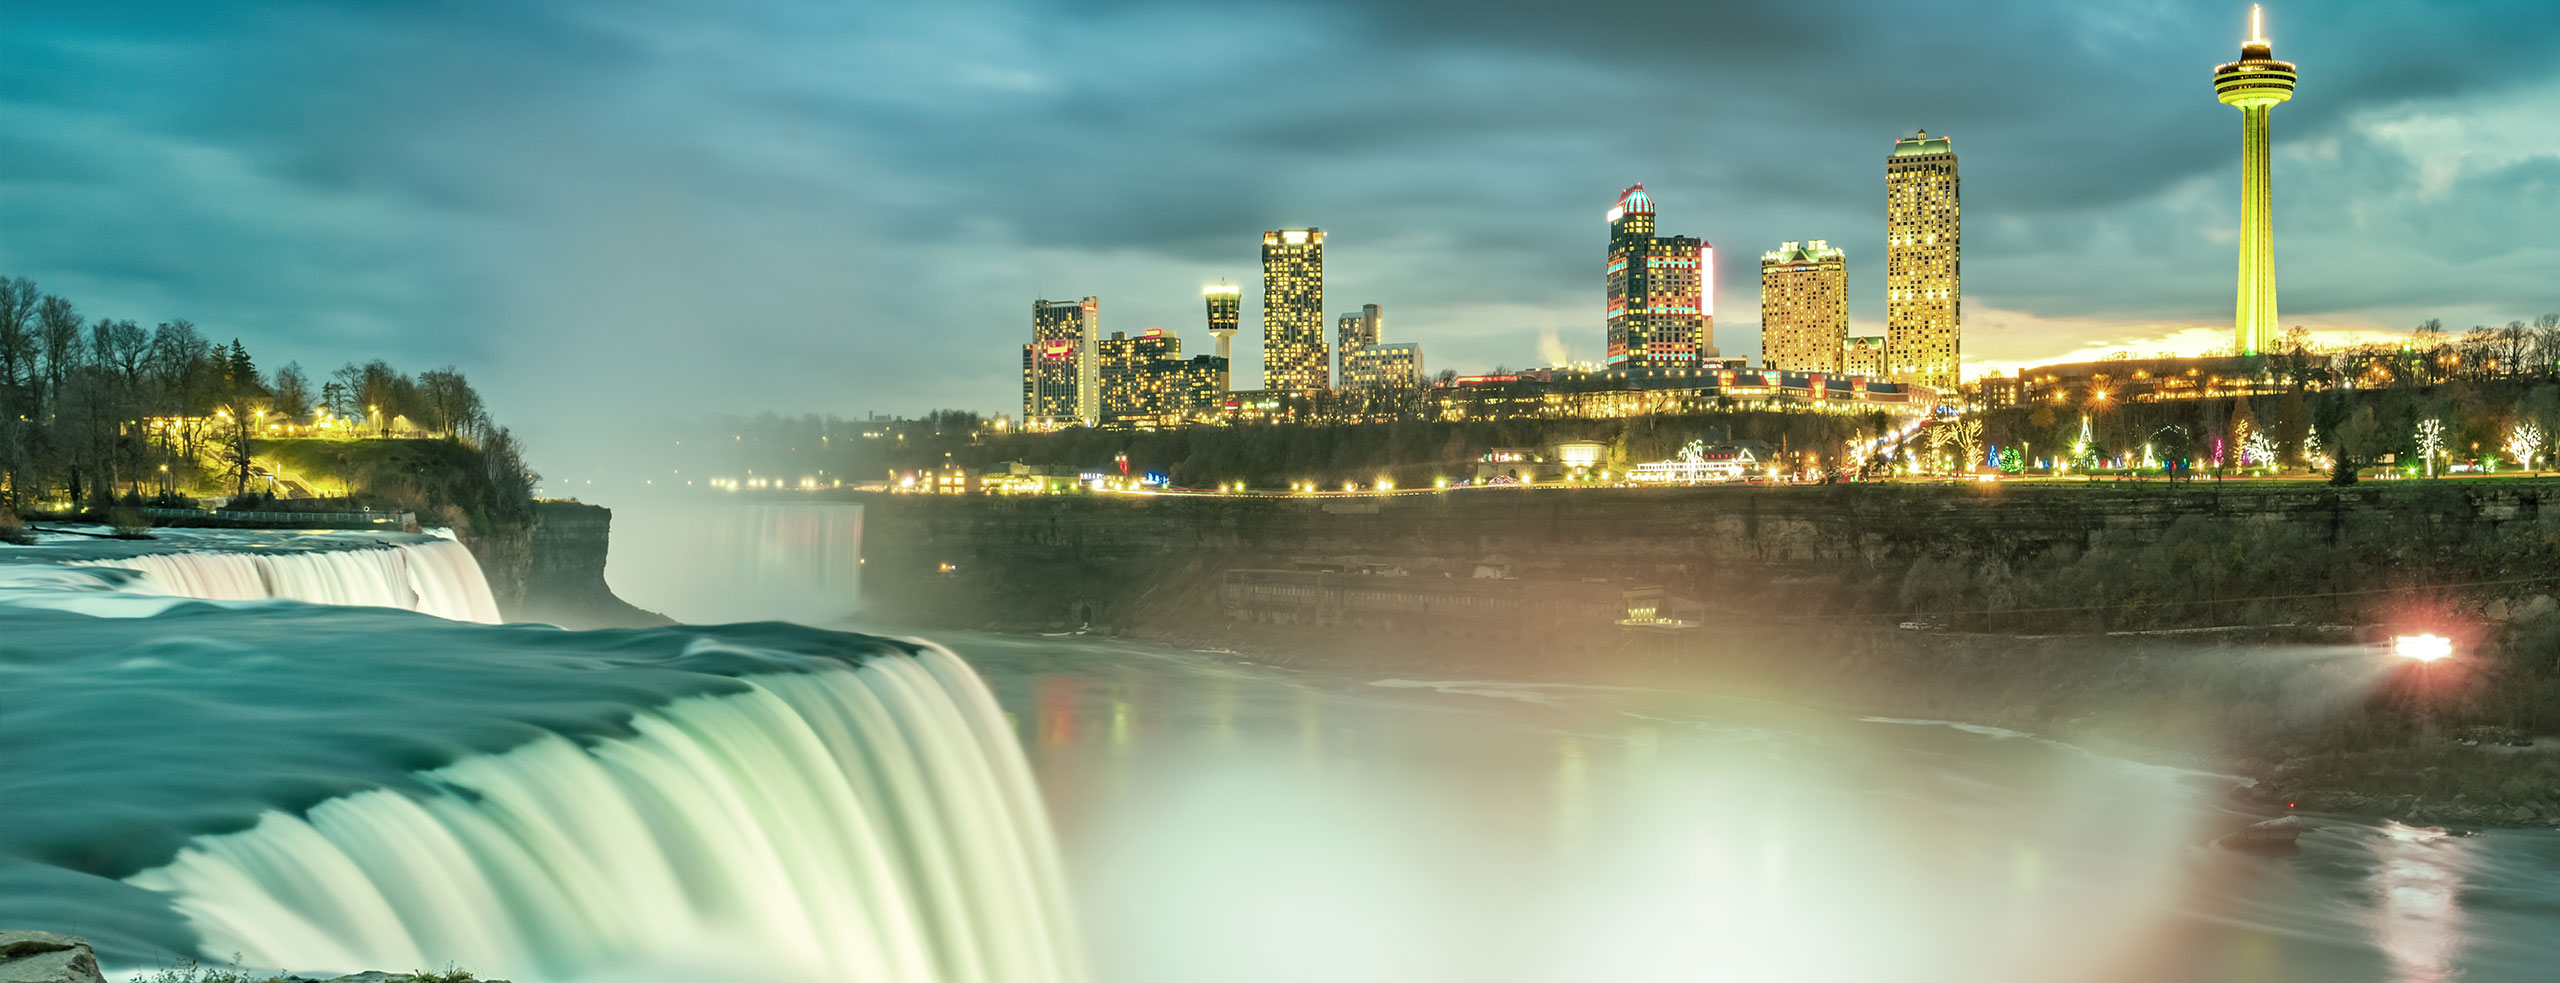 The city of Niagara Falls, Ontario, Canada at night beside the falls